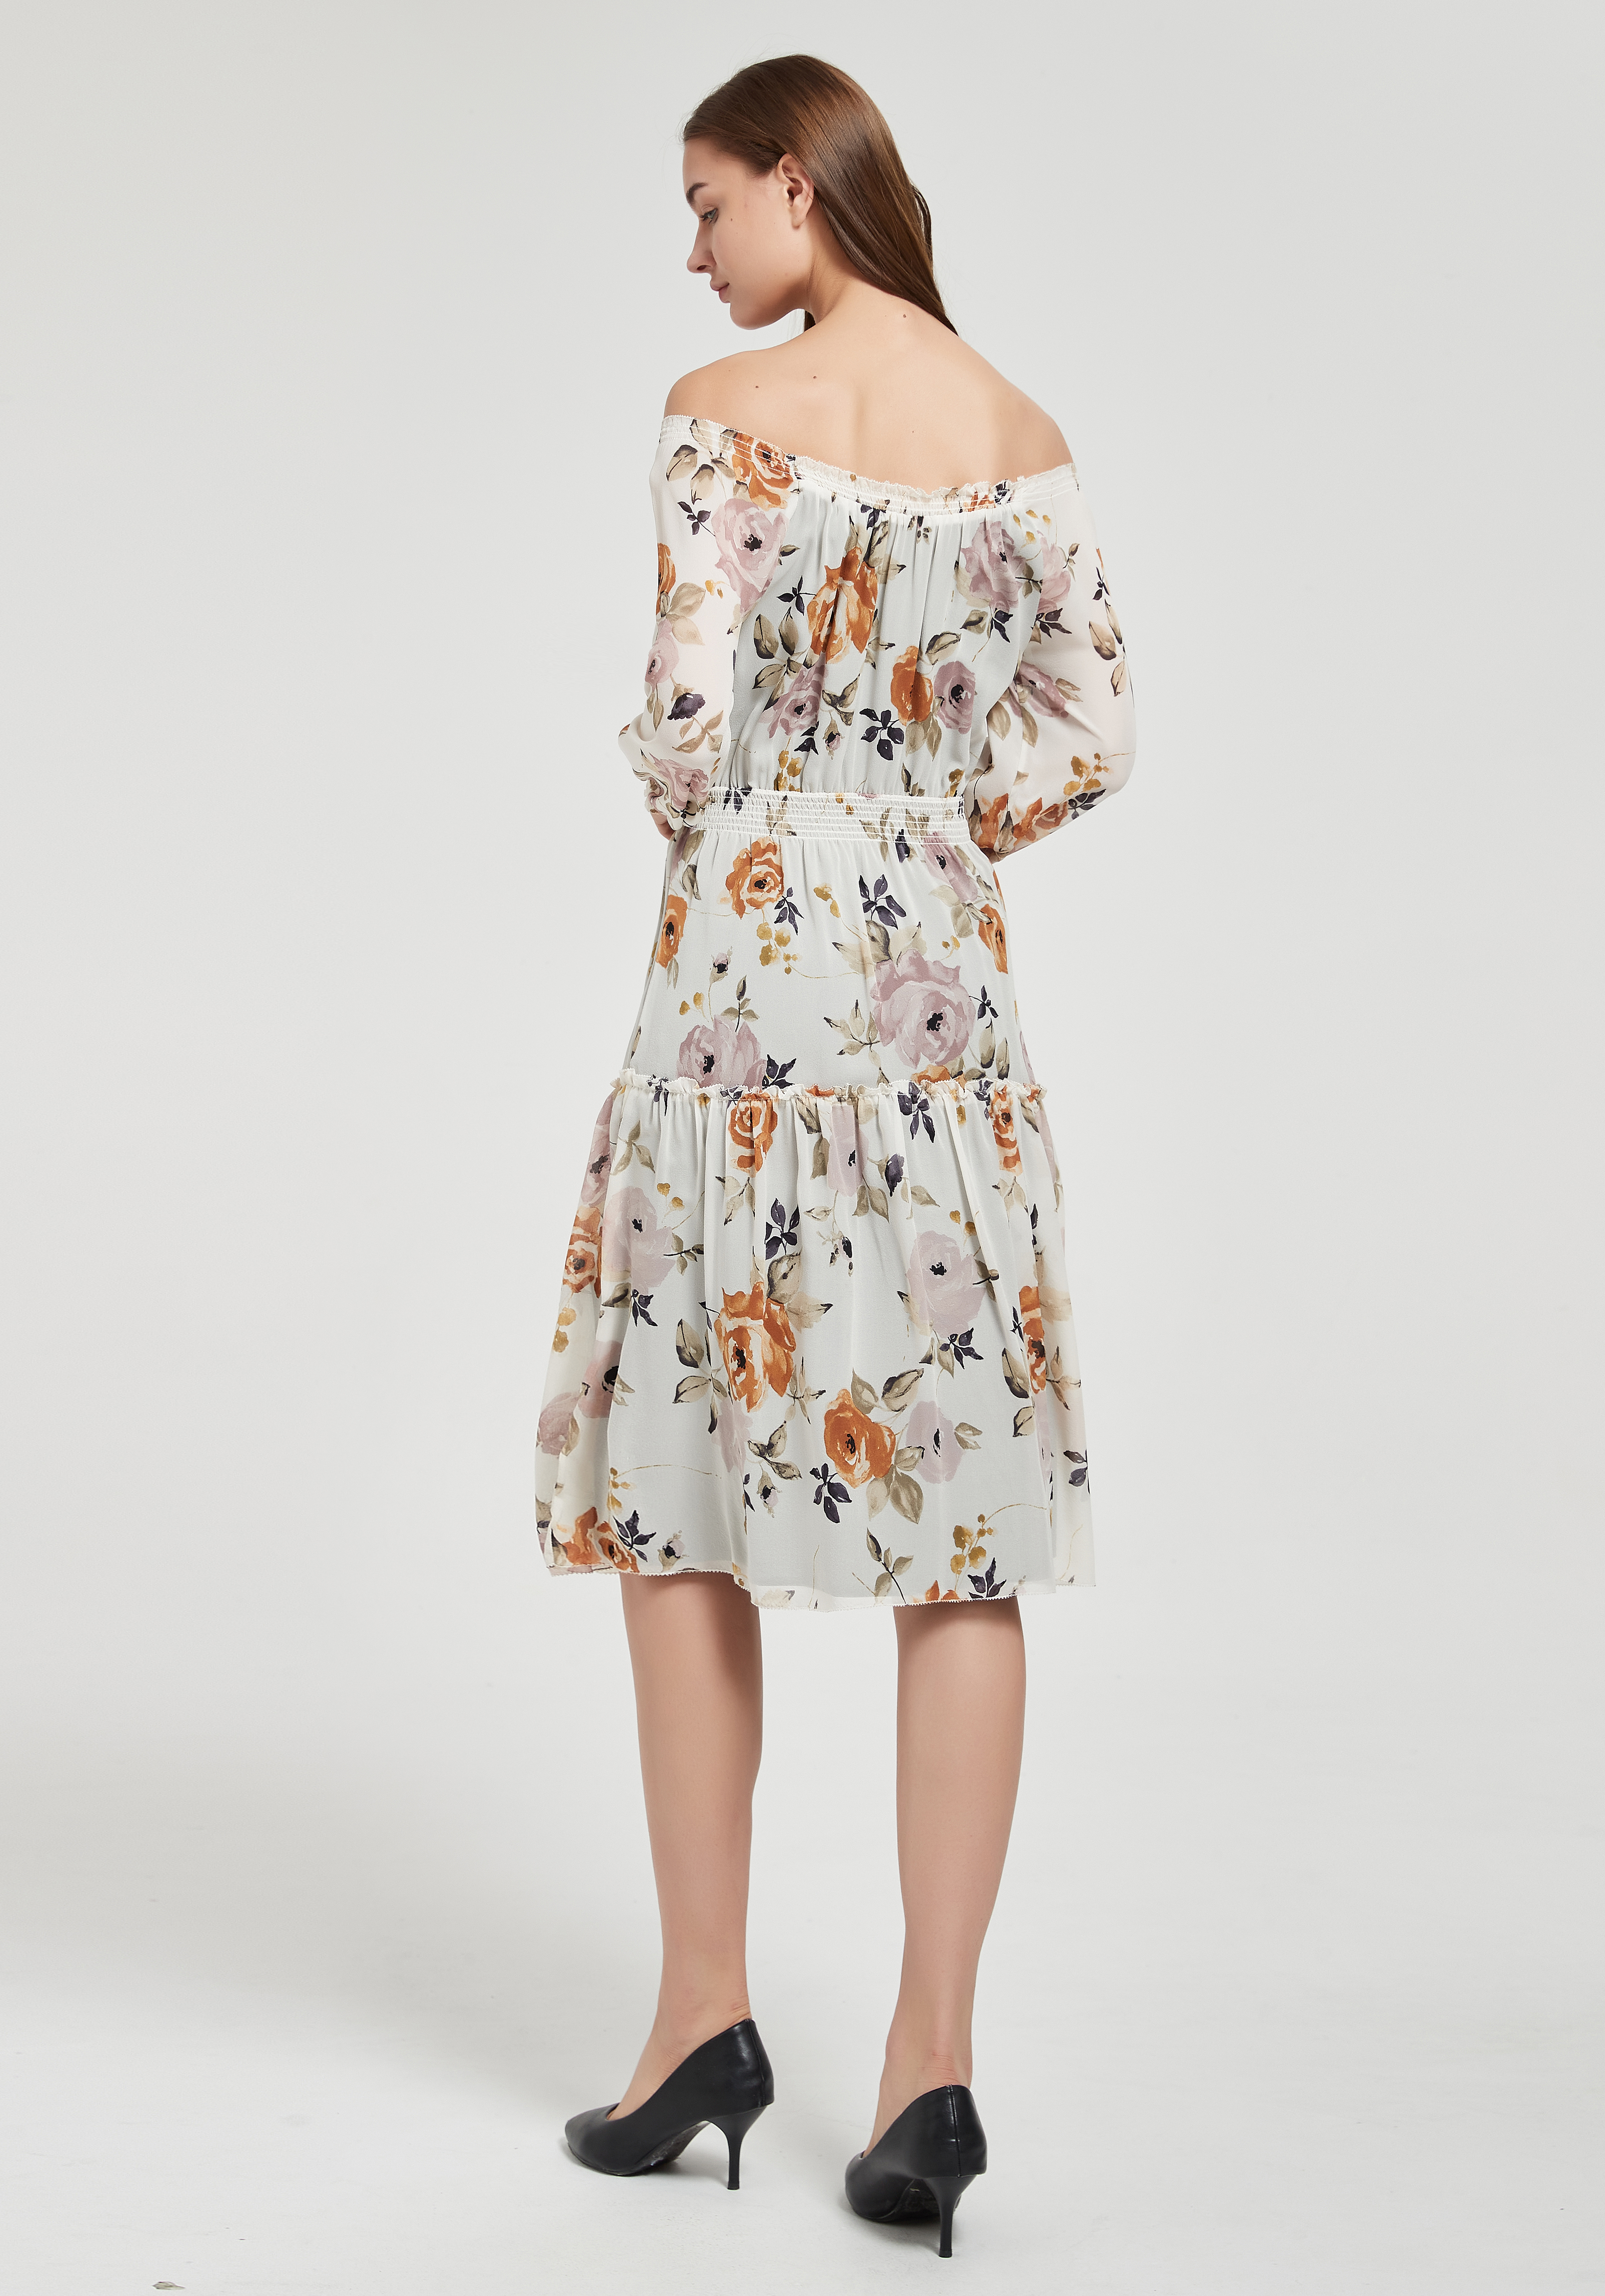 Women’s Fashion One-Shoulder Halter Print Dress